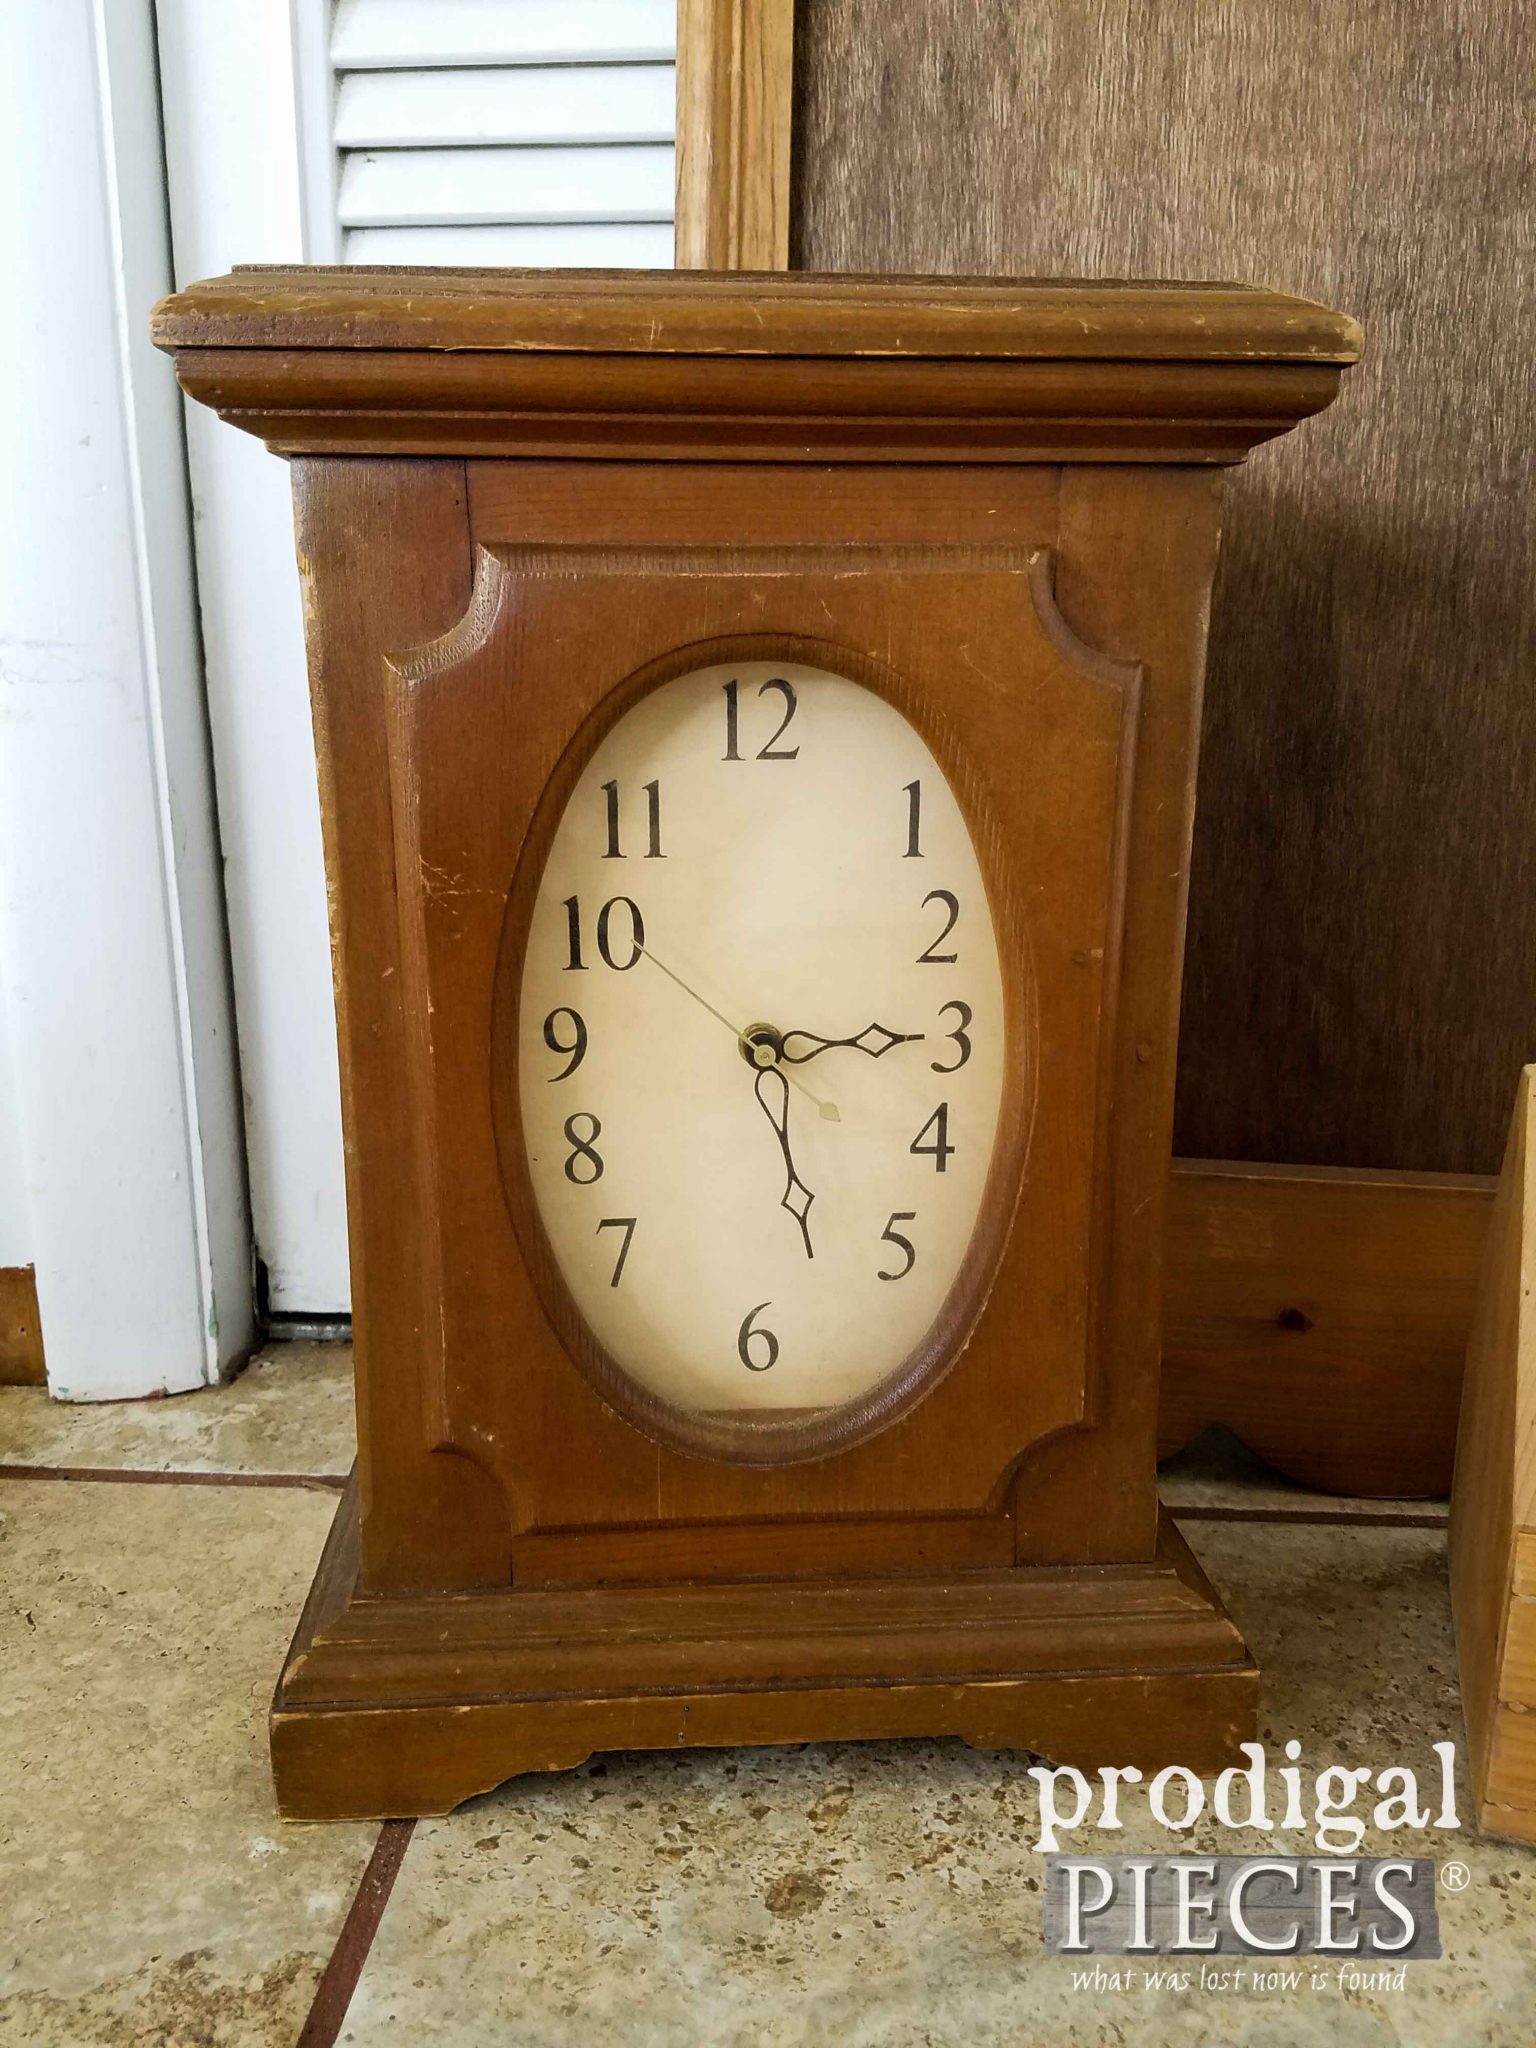 Thrifted Mantel Clock Before Makeover by Prodigal Pieces | prodigalpieces.com